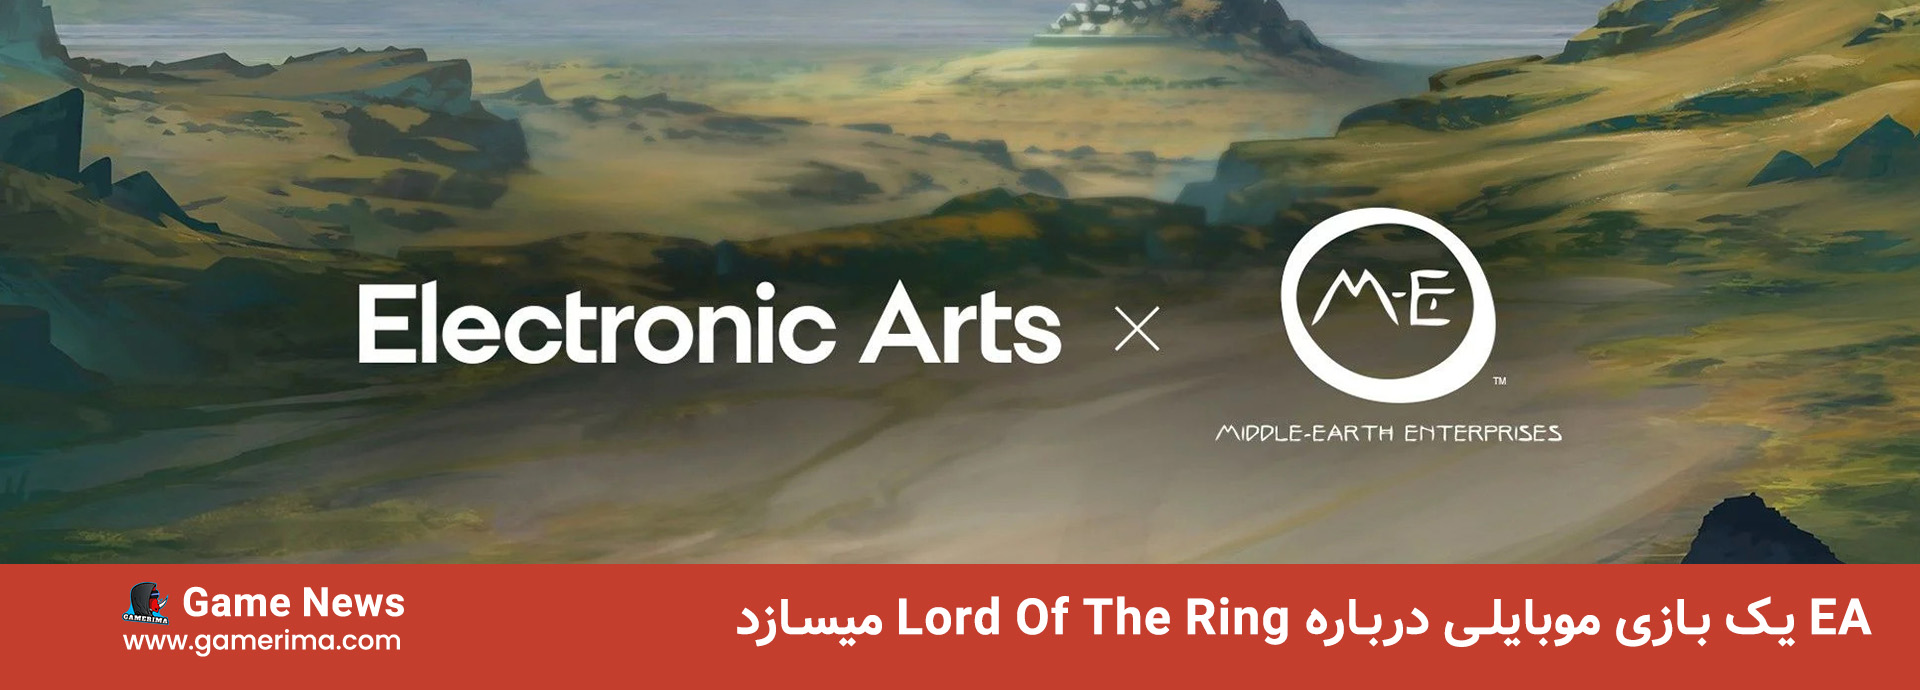 EA یک بازی موبایلی درباره Lord Of The Ring میسازد